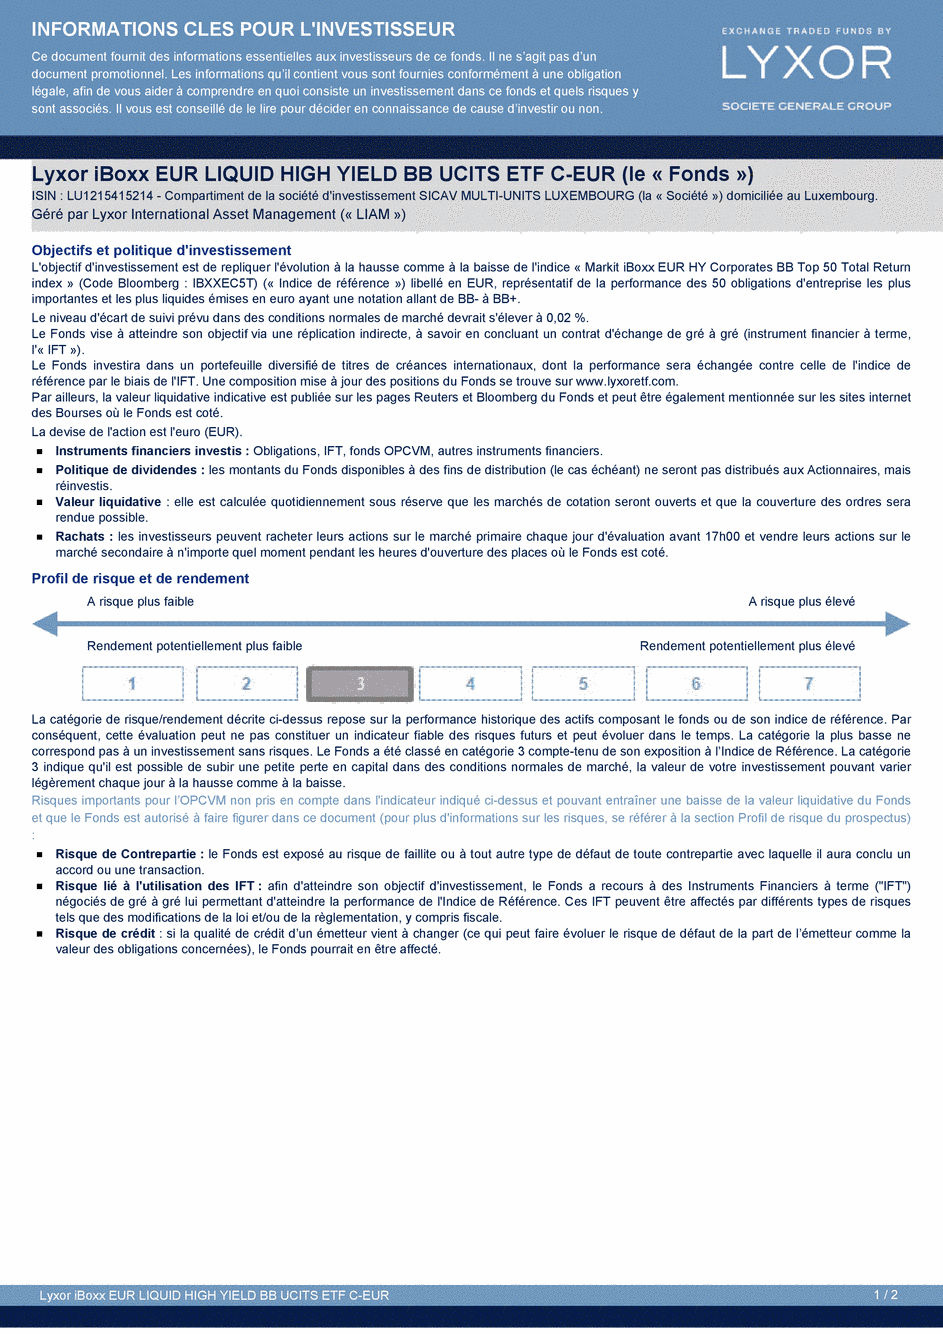 DICI Lyxor iBoxx EUR Liquid High Yield BB UCITS ETF - Acc - 30/04/2015 - Français